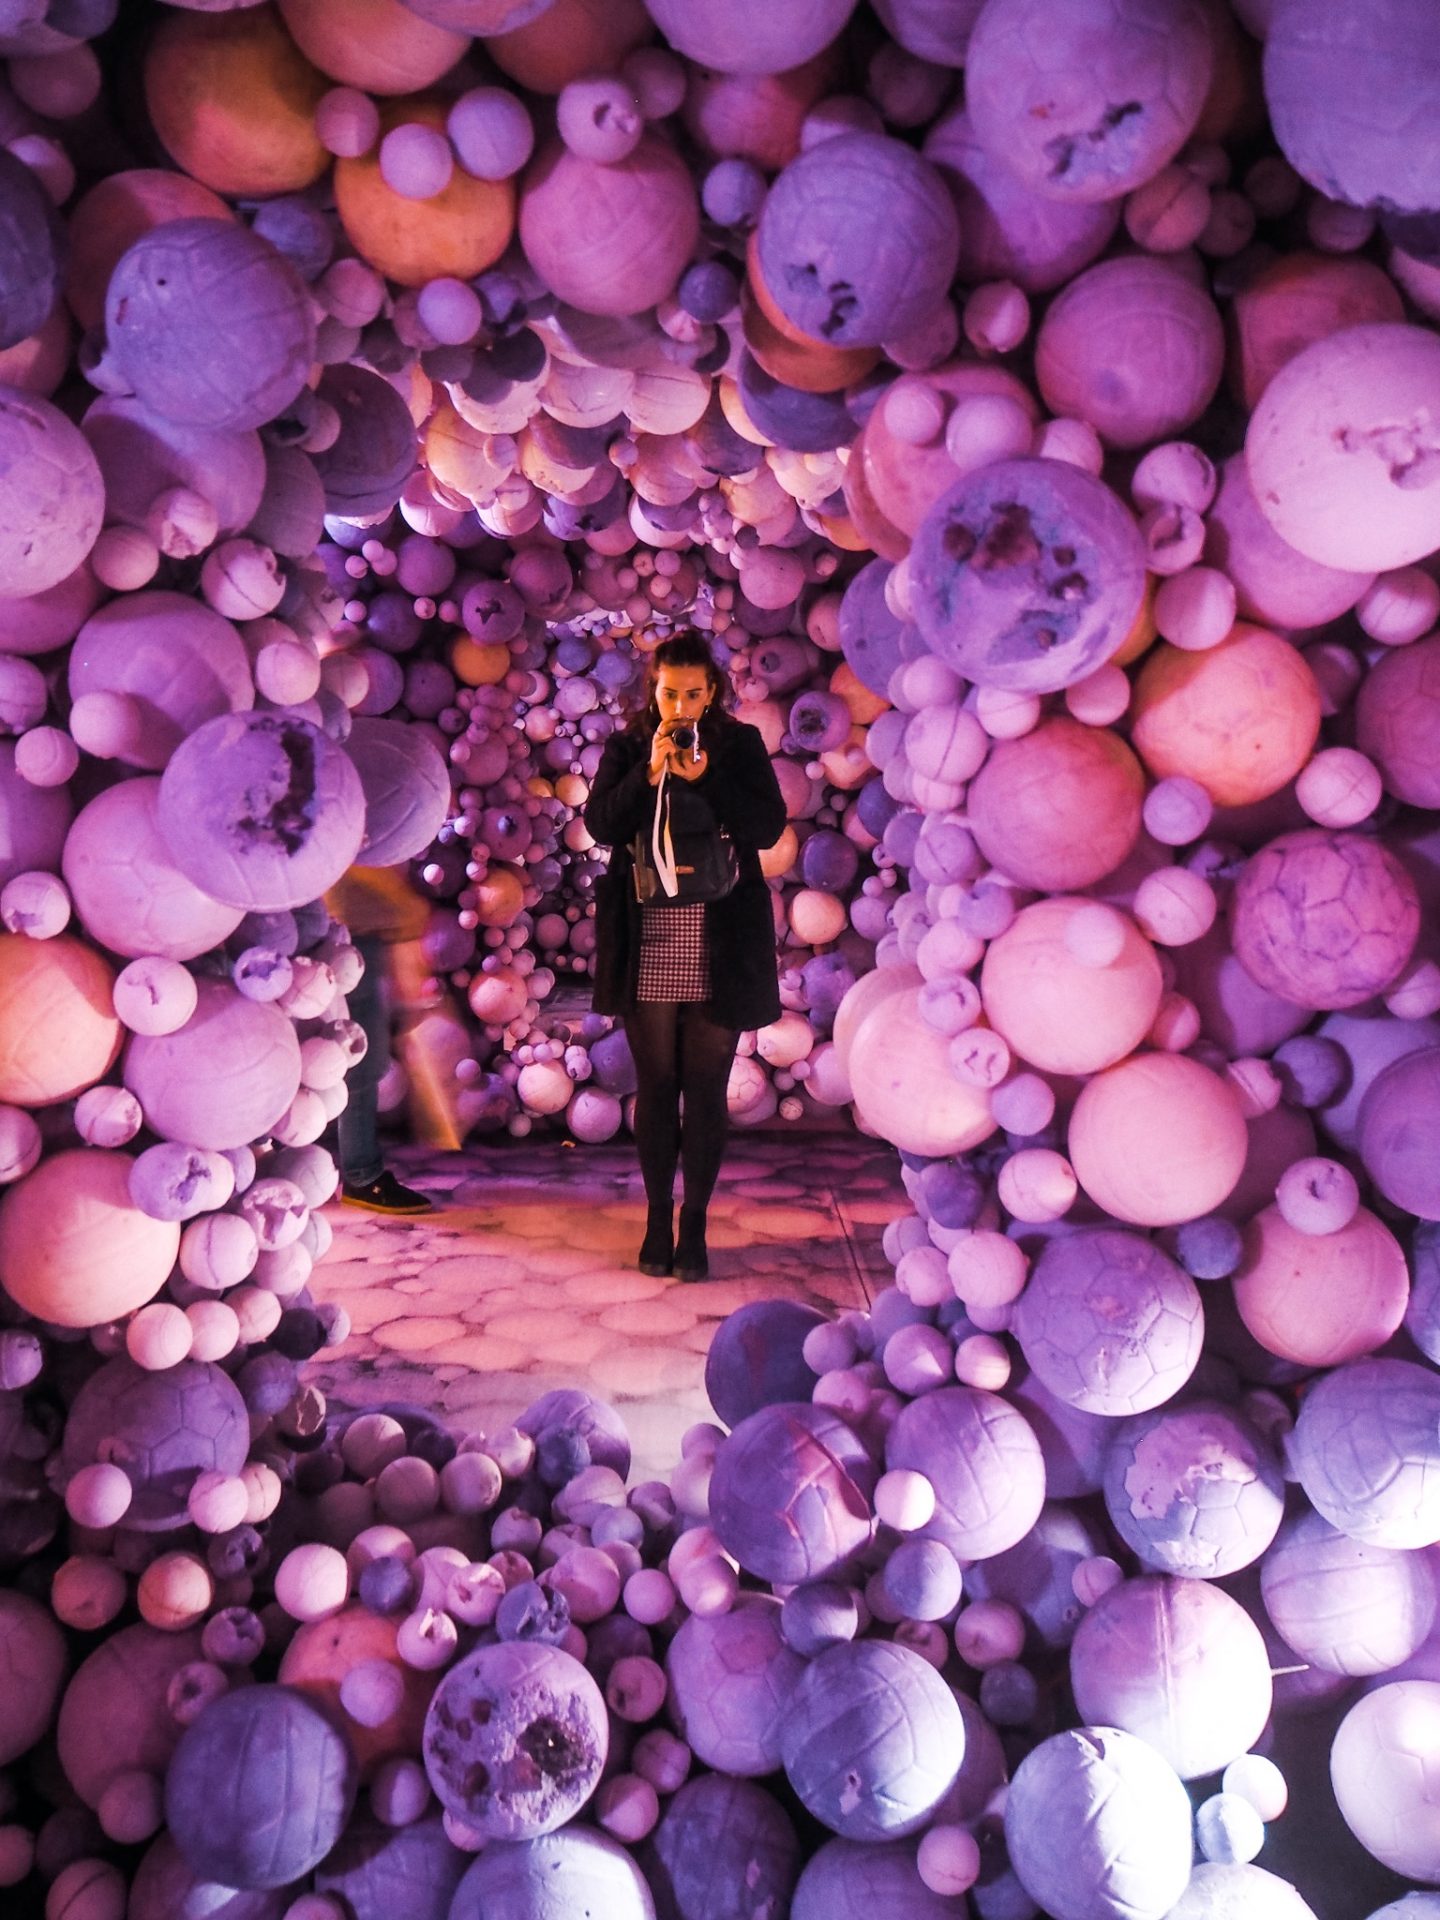 Purple balls at MOCO museum in Amsterdam